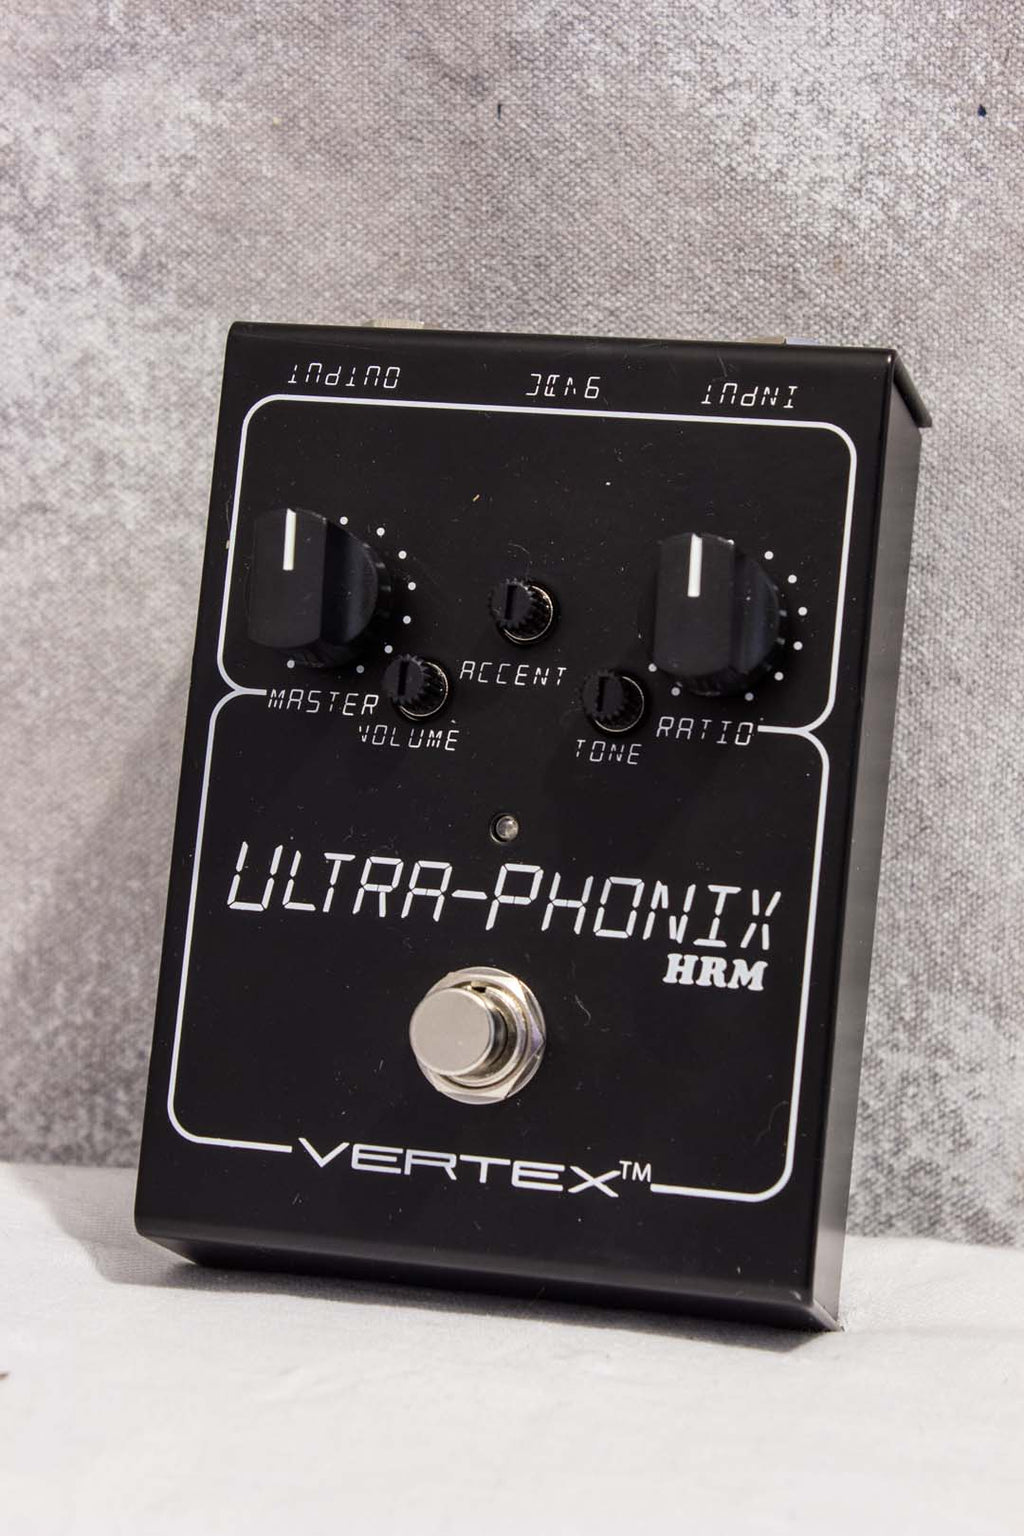 Vertex Ultraphonix HRM Overdrive Pedal